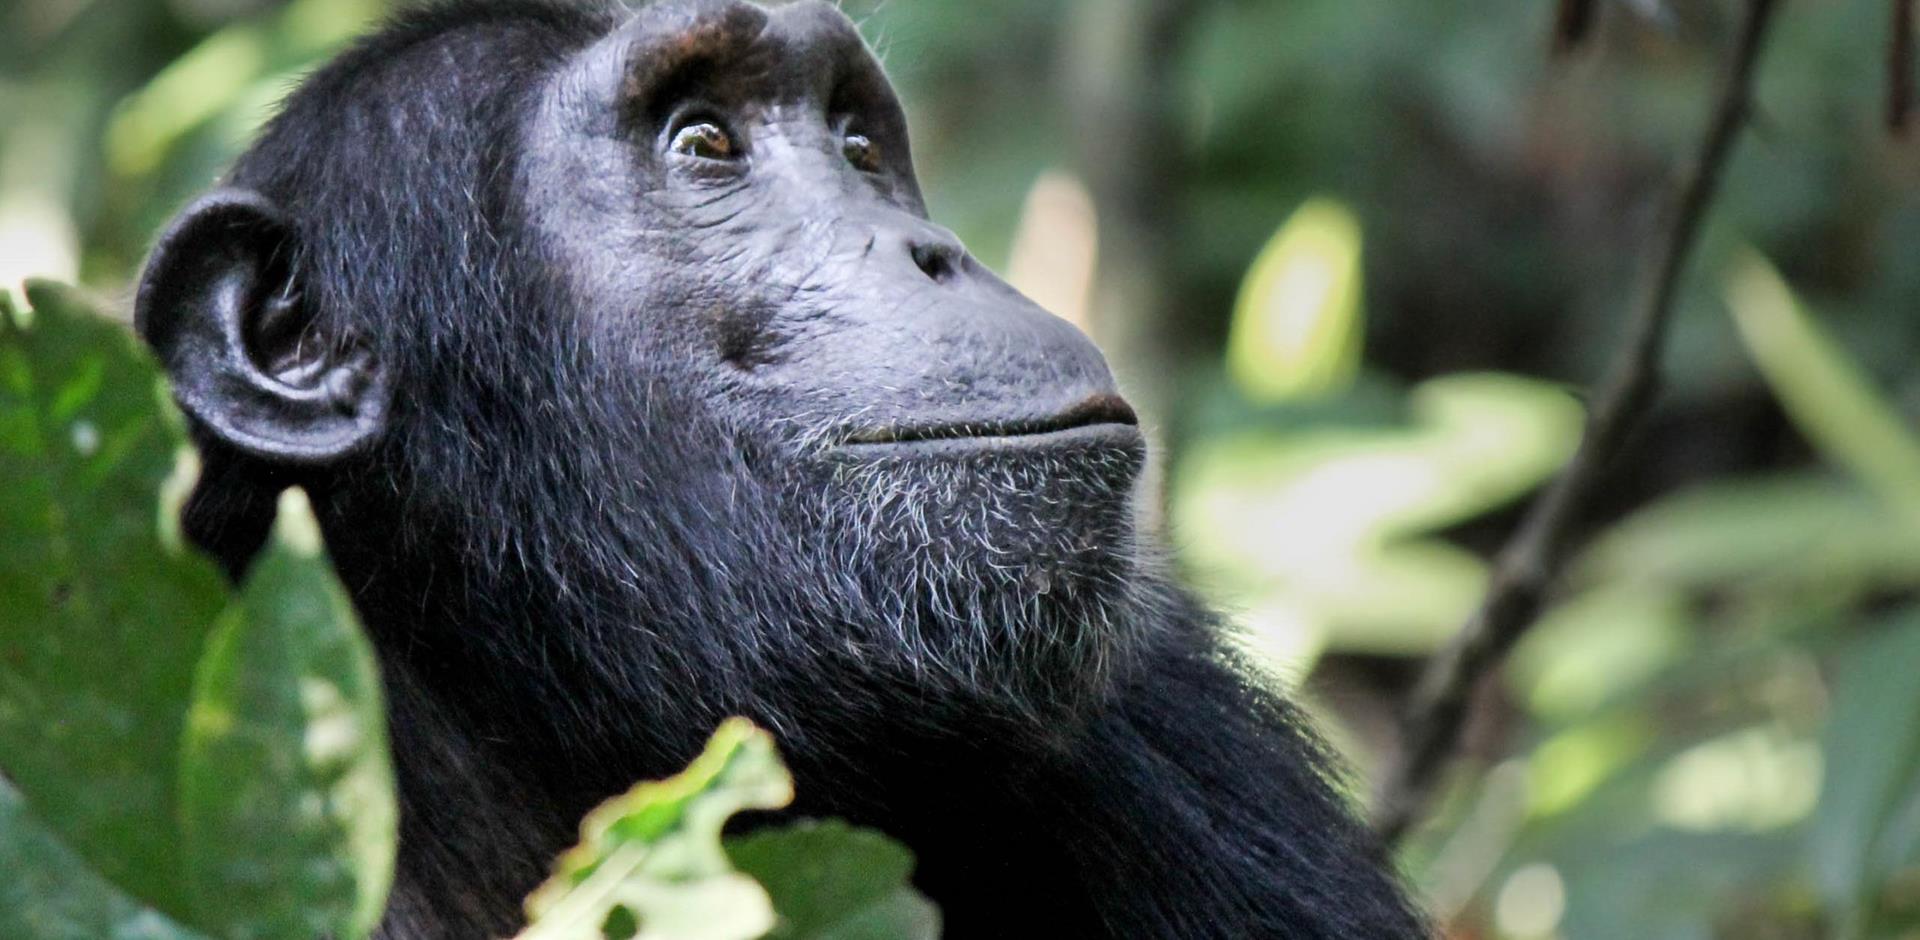 Uganda Gorillas and Beyond Escorted Tour